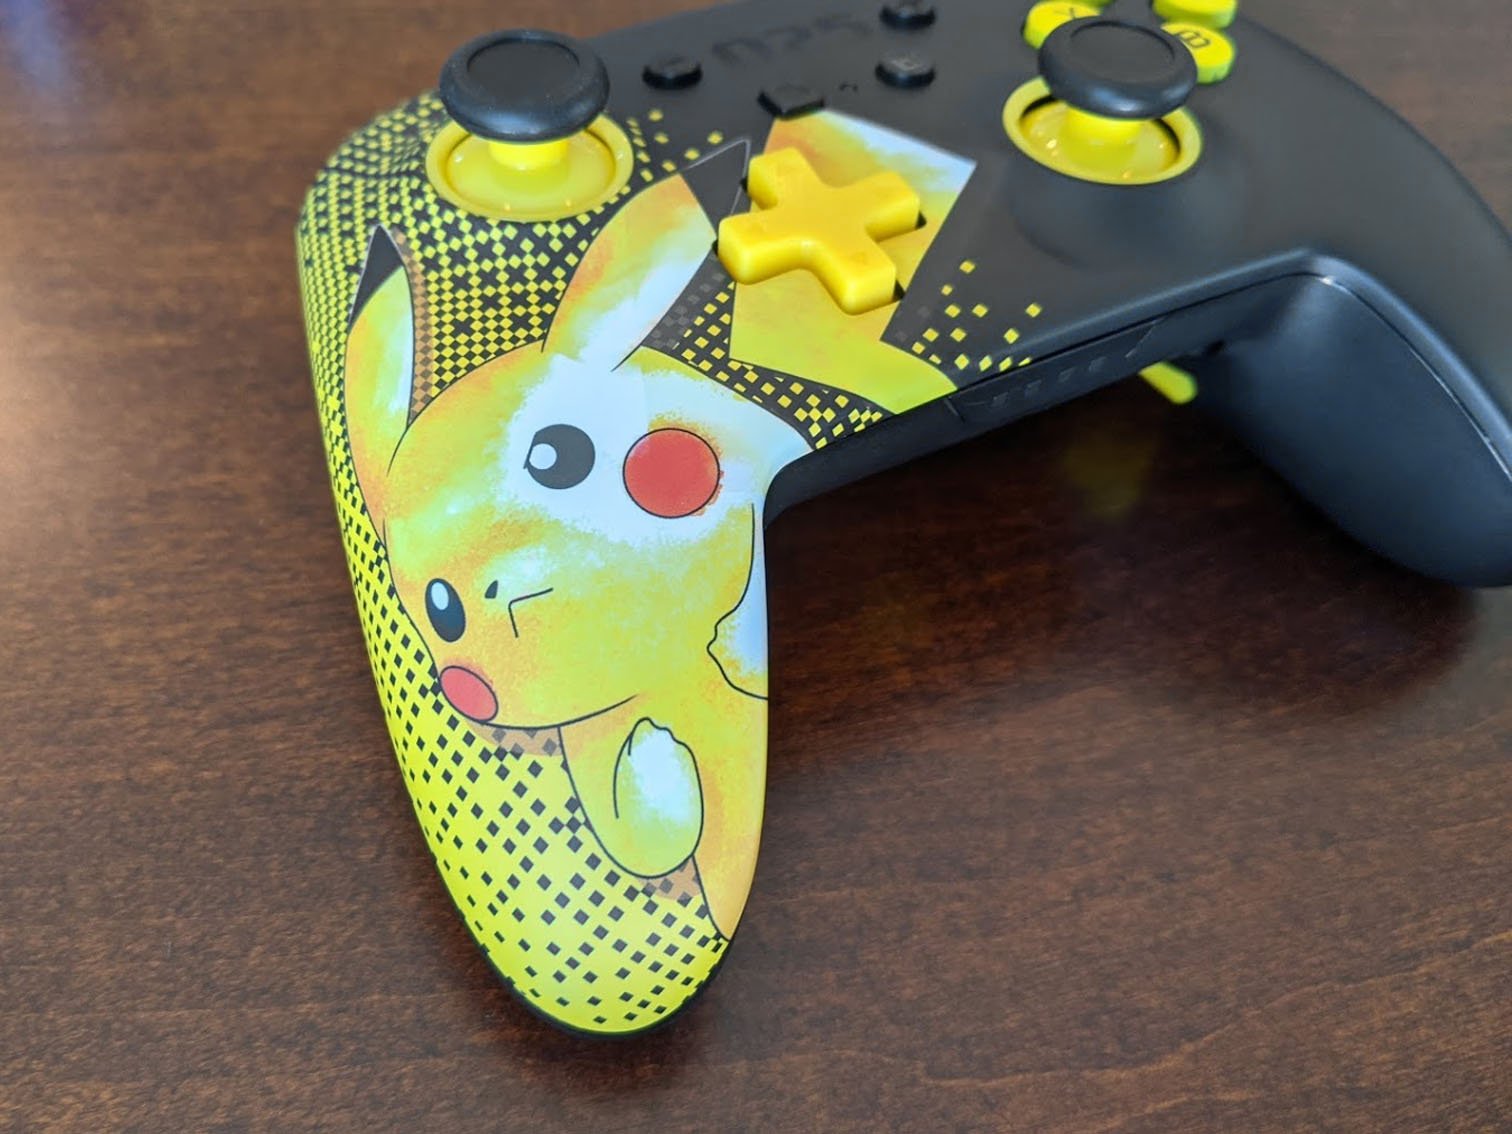 Powera Pikachu Controller Pikachu Closeup